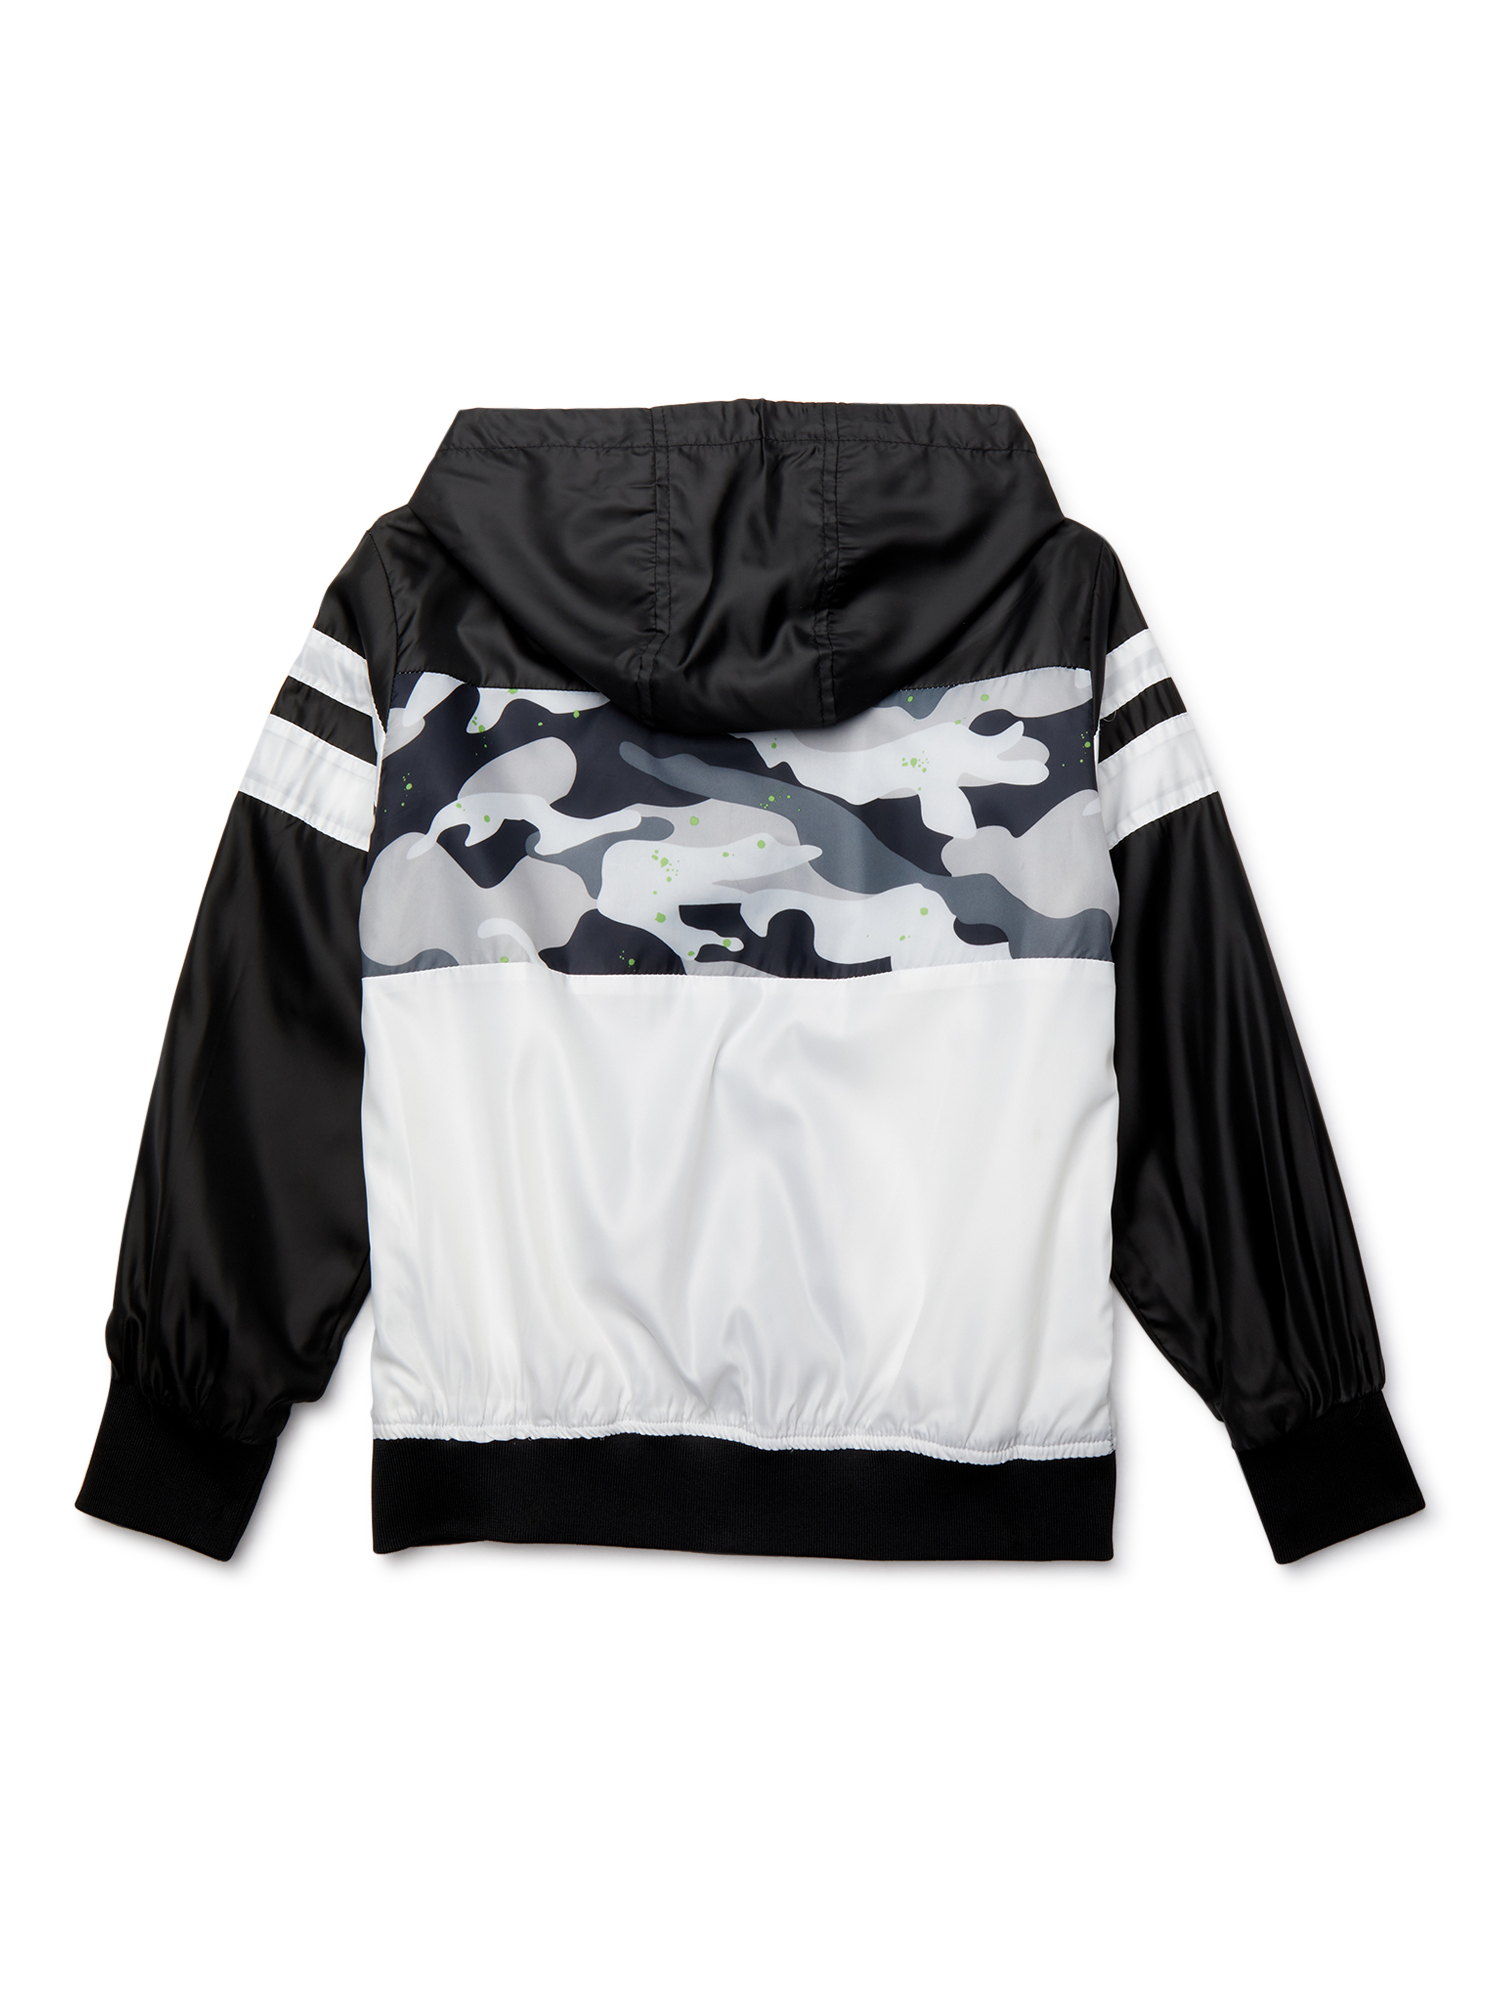 Phat Farm Boys Colorblock Camo Zip-Up Rain Jacket Sizes 8-18 - image 2 of 3